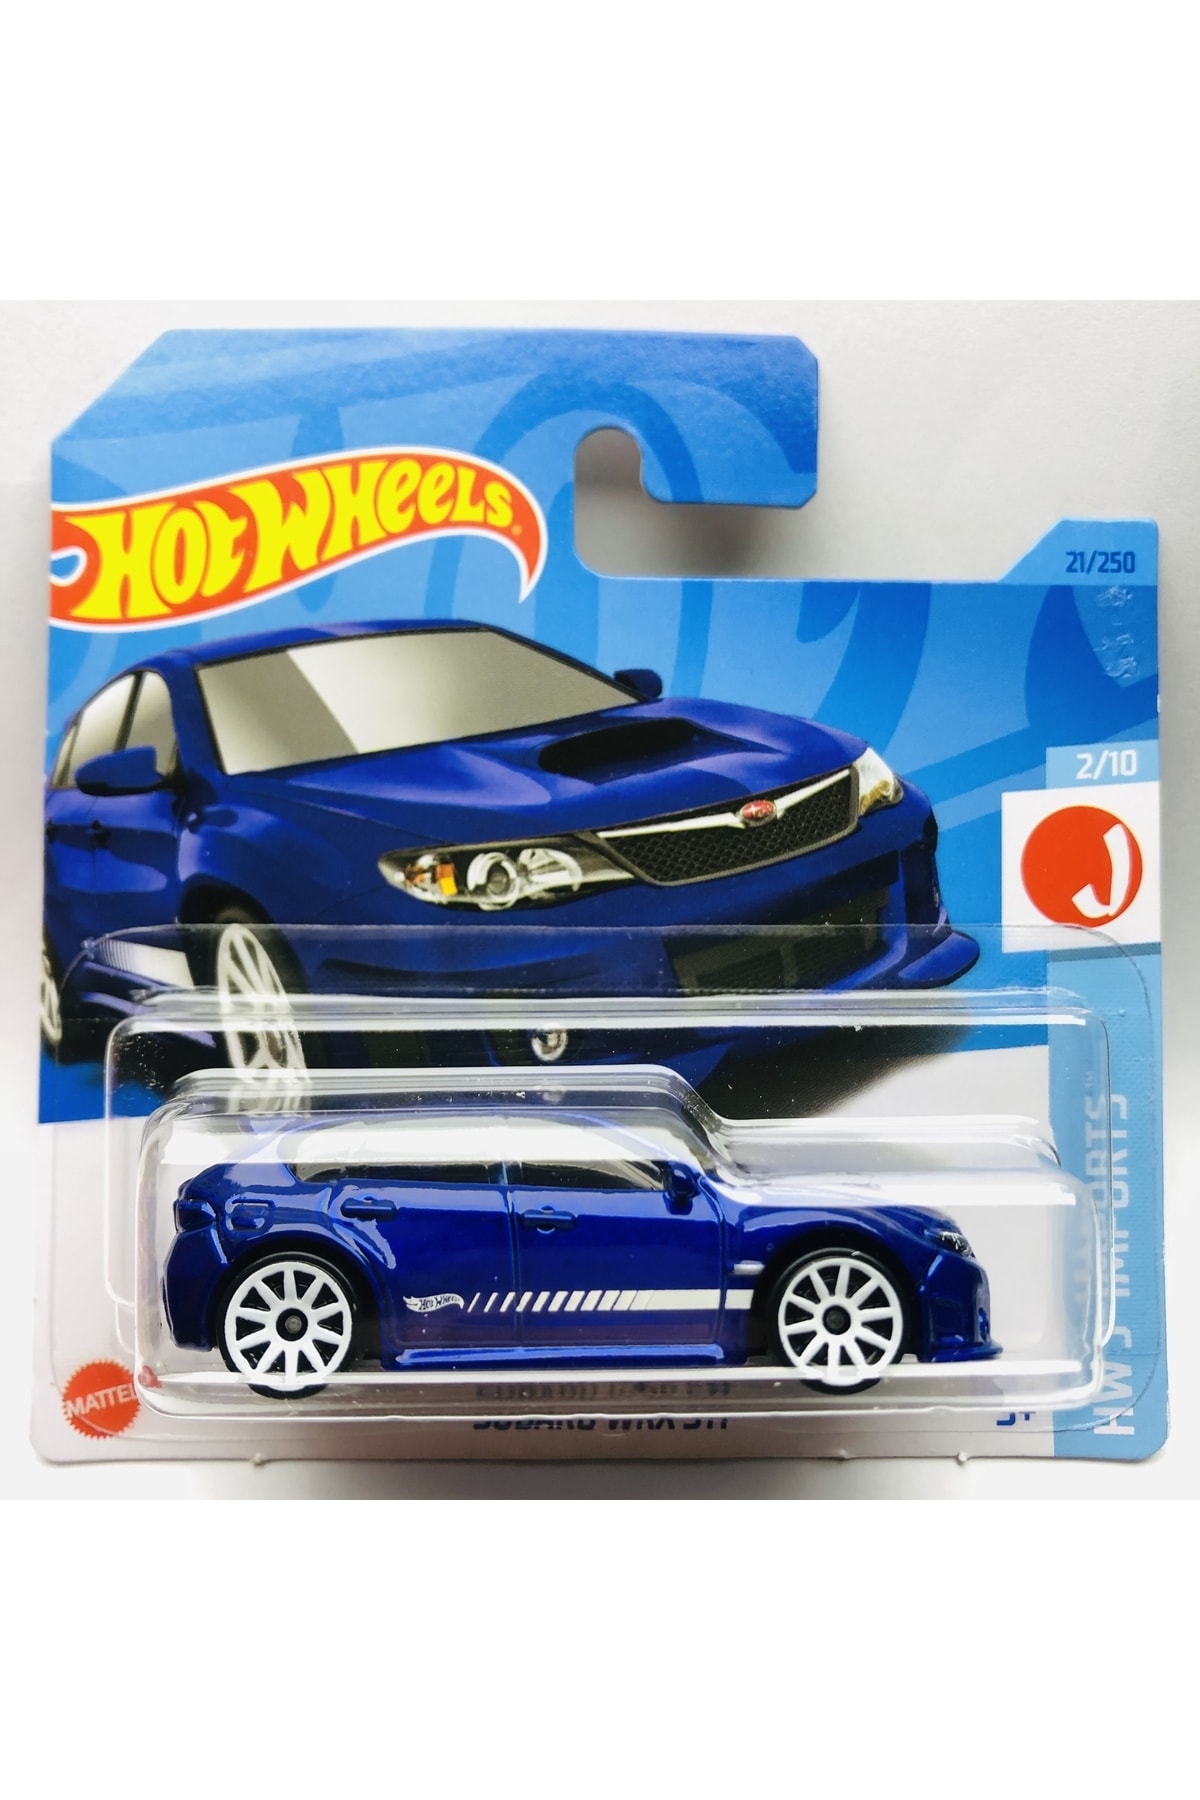 HOT WHEELS Yeni - New Subaru Wrx Stı Blue Mini Araba 1:64 Ölçek Hotwheels Marka 2/5